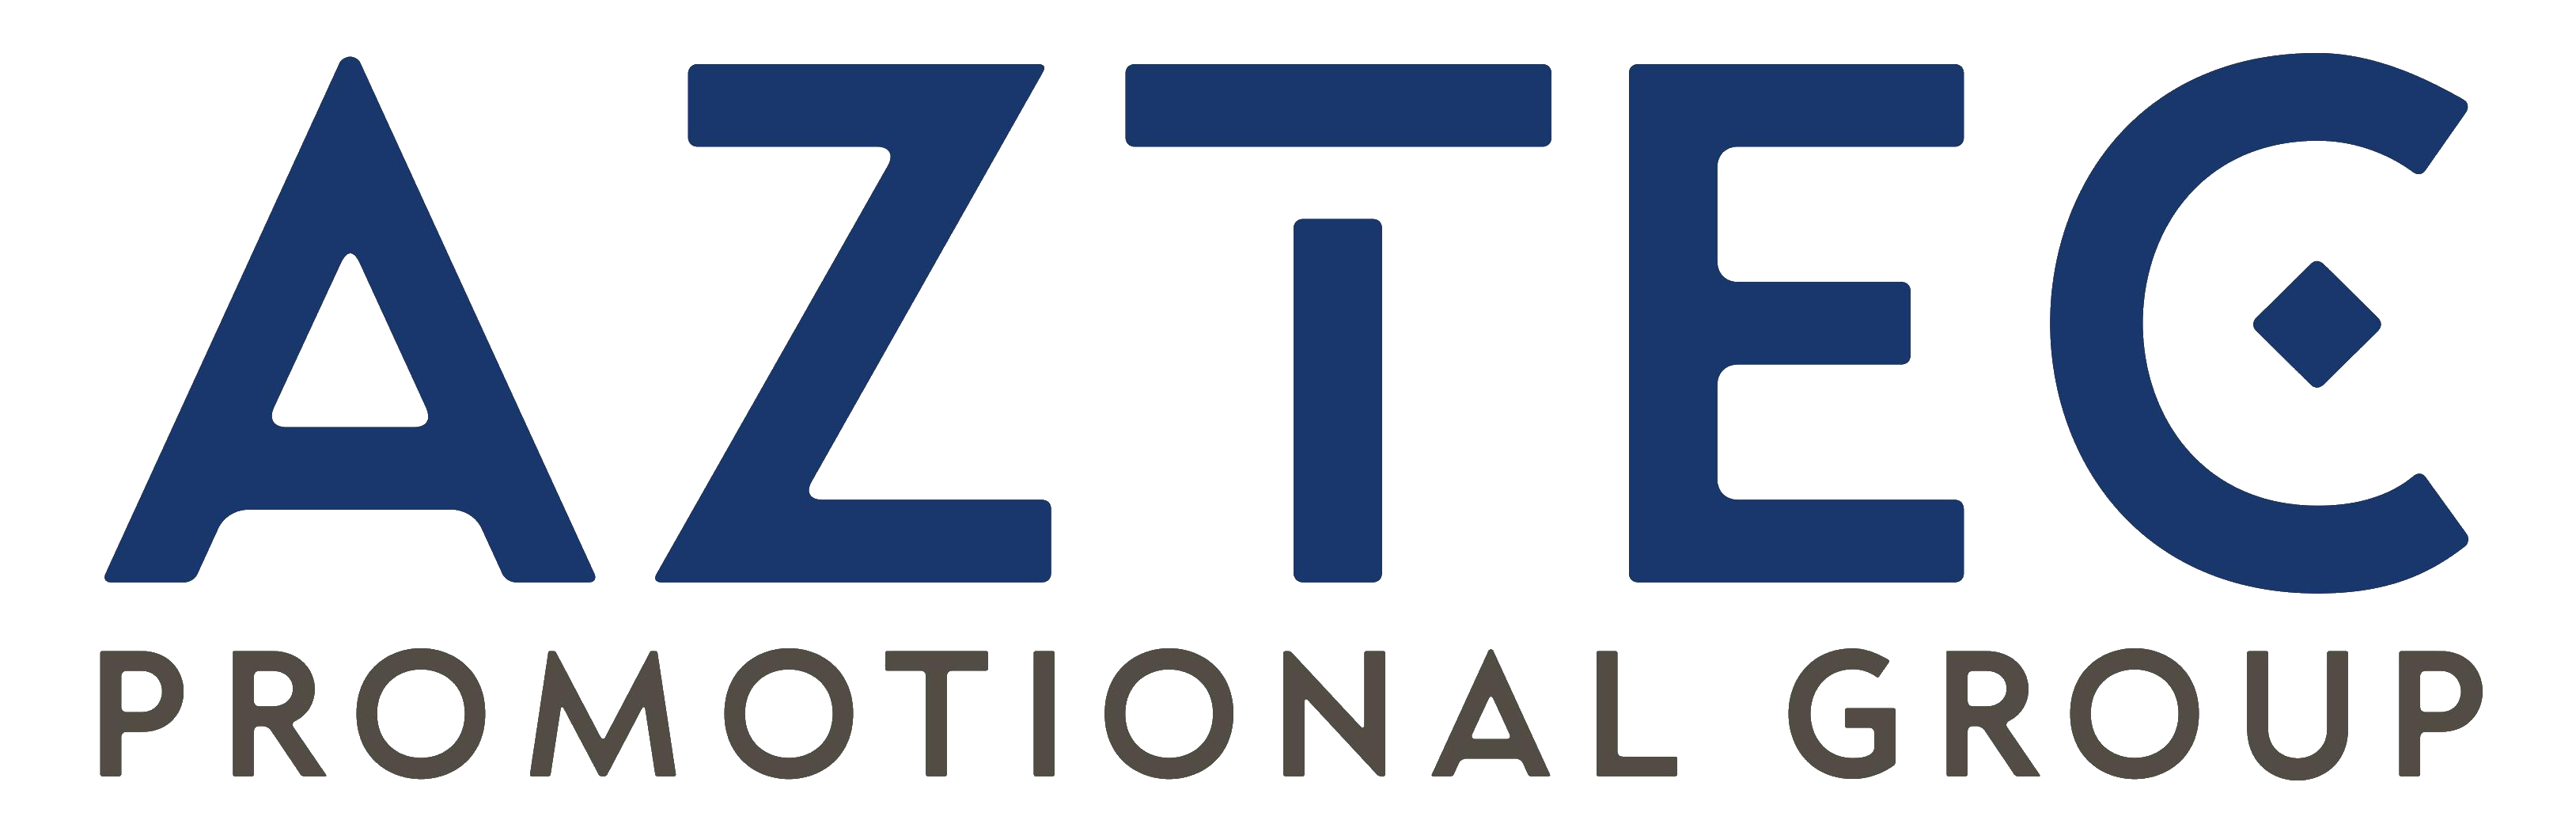 Aztec Promotional Group's Logo